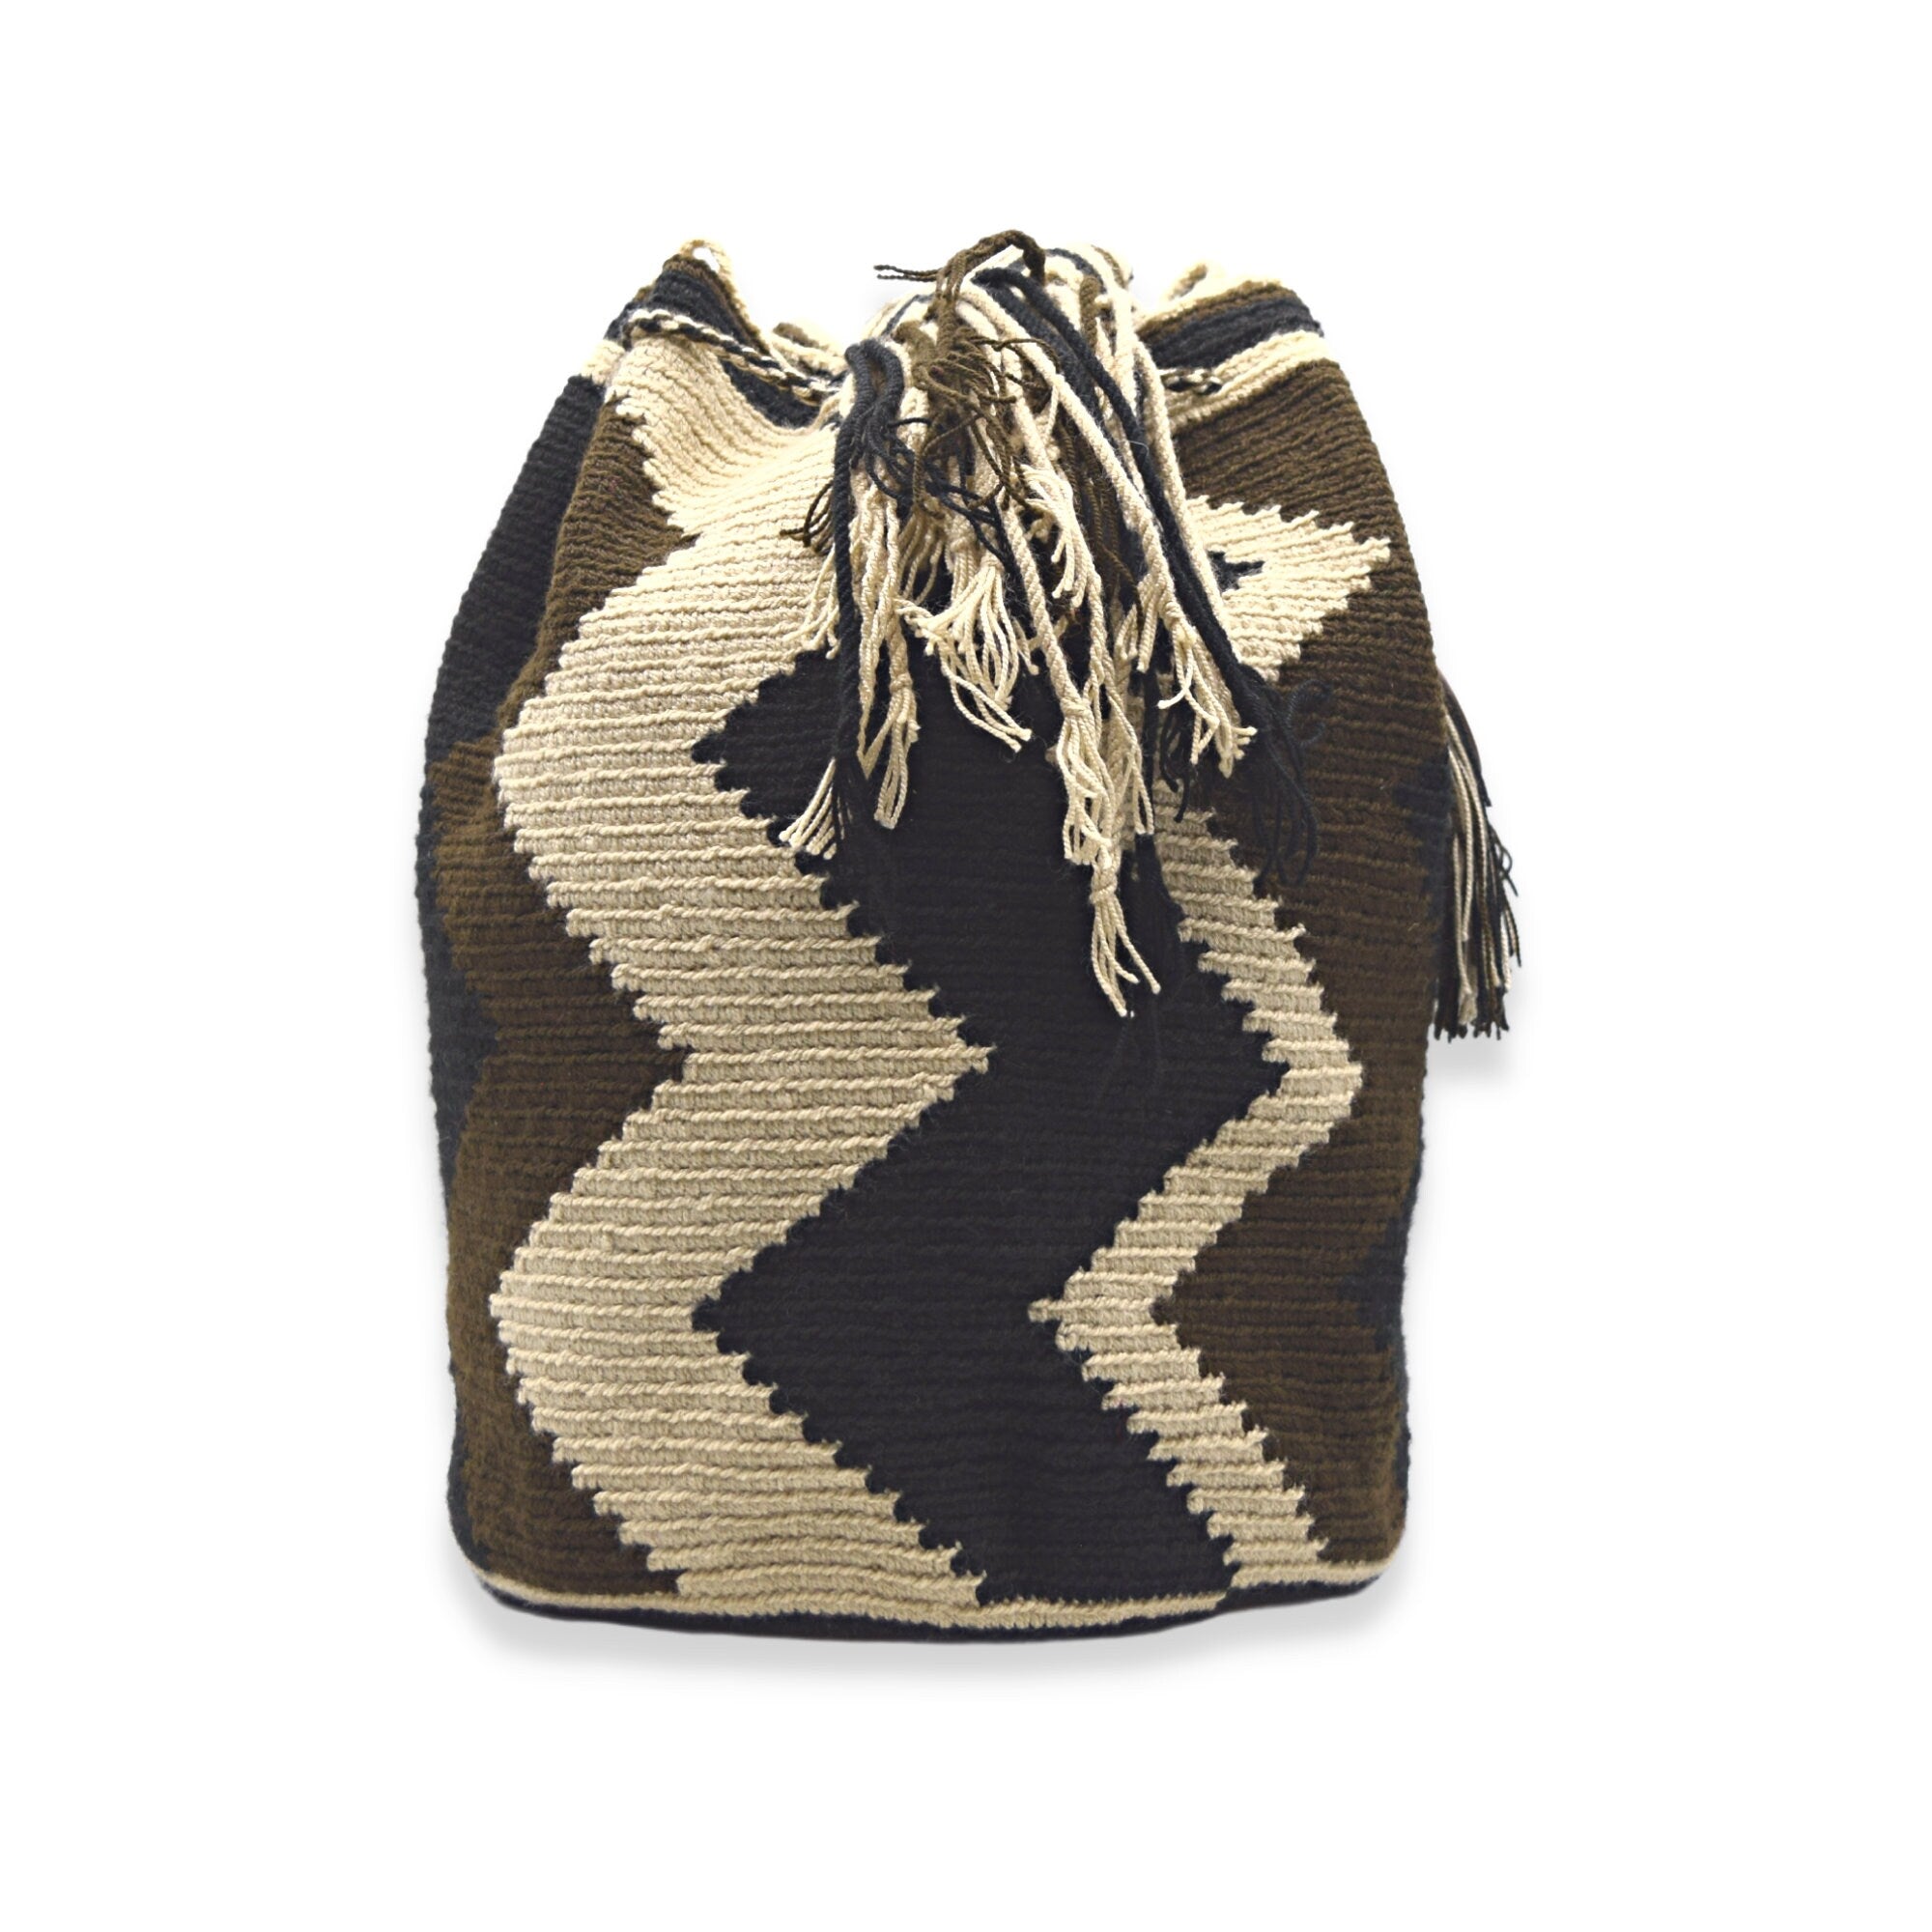 Wayuu mochila bag | Large Tradicional | Brown Beige and White Zig Zag